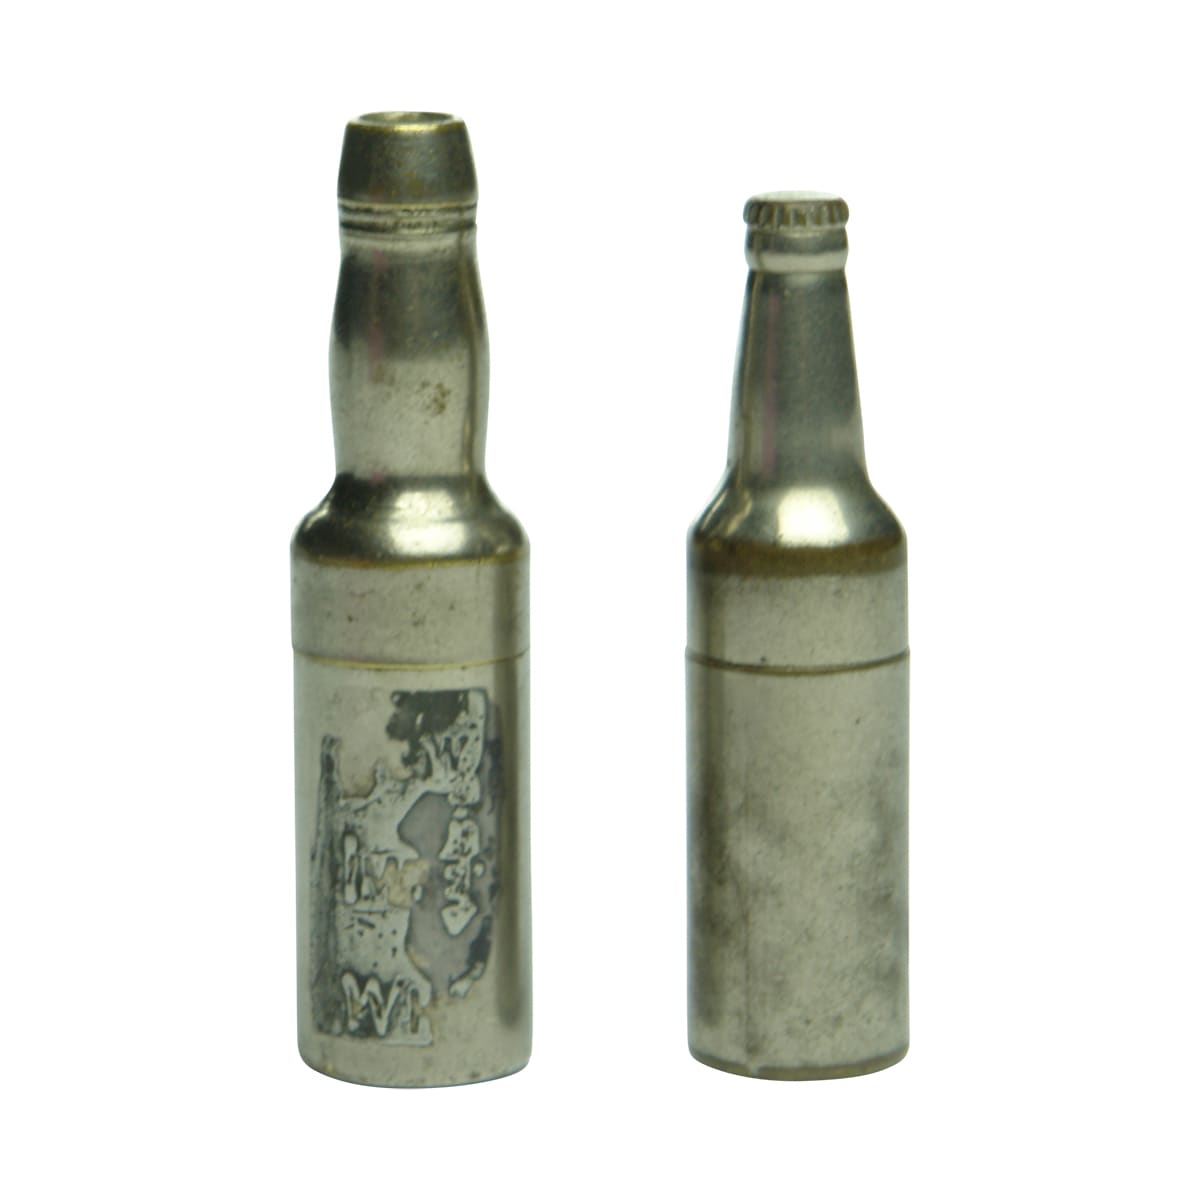 Small metal bottle shaped corkscrew and cigarette lighter